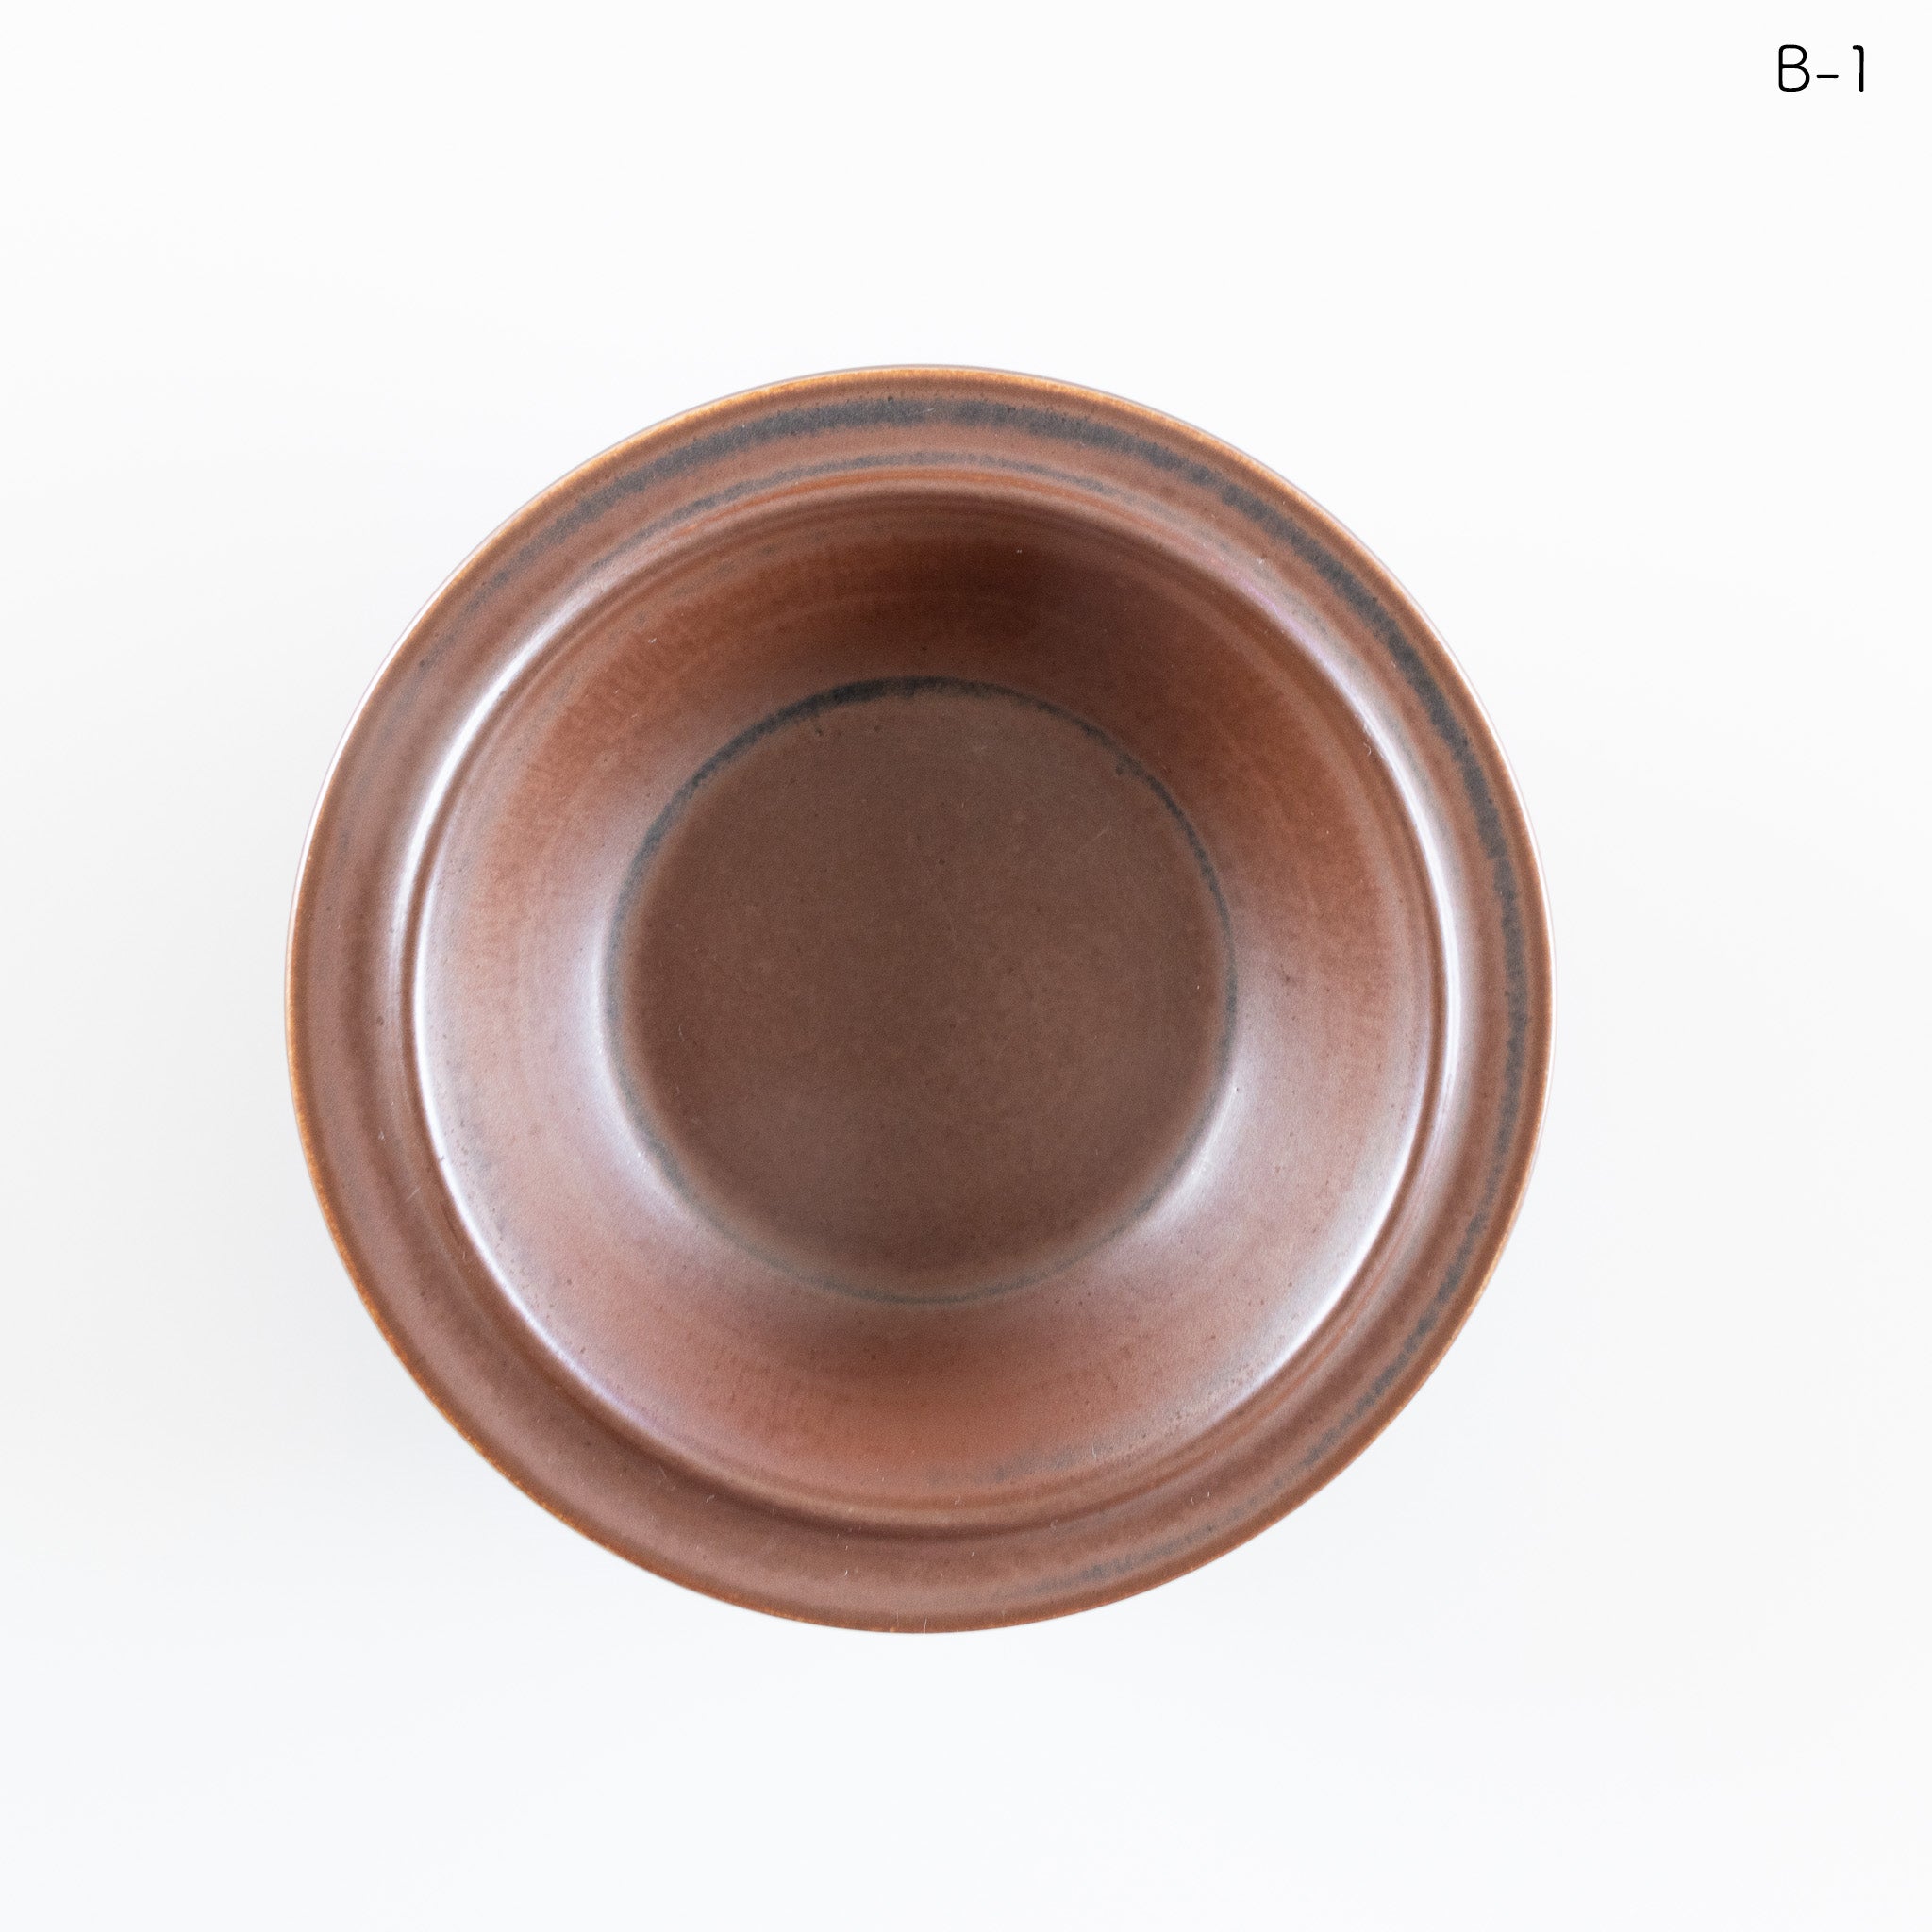 ruska (ルスカ) bowl 17.5cm / arabia (アラビア)